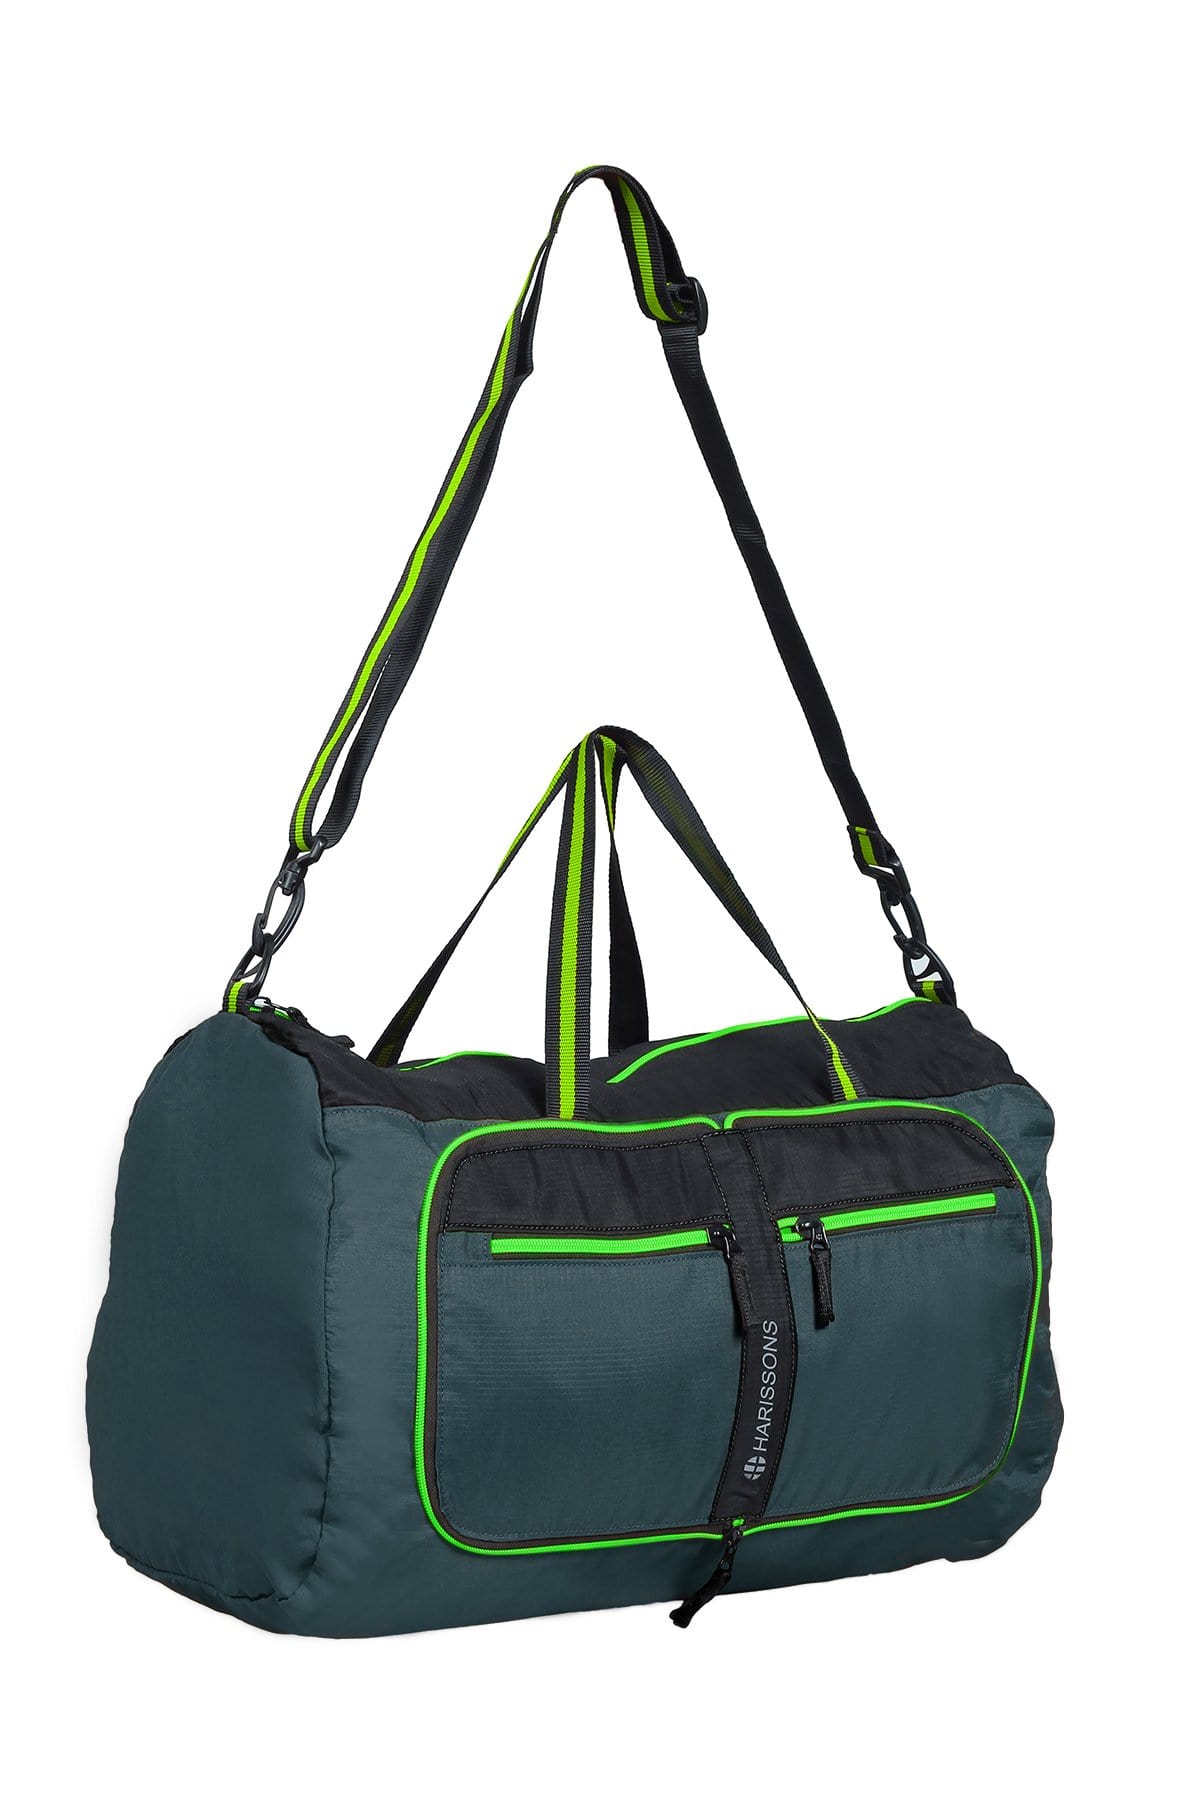 72L Travel Duffle Bag Foldable for Men Women Extra Large Duffle